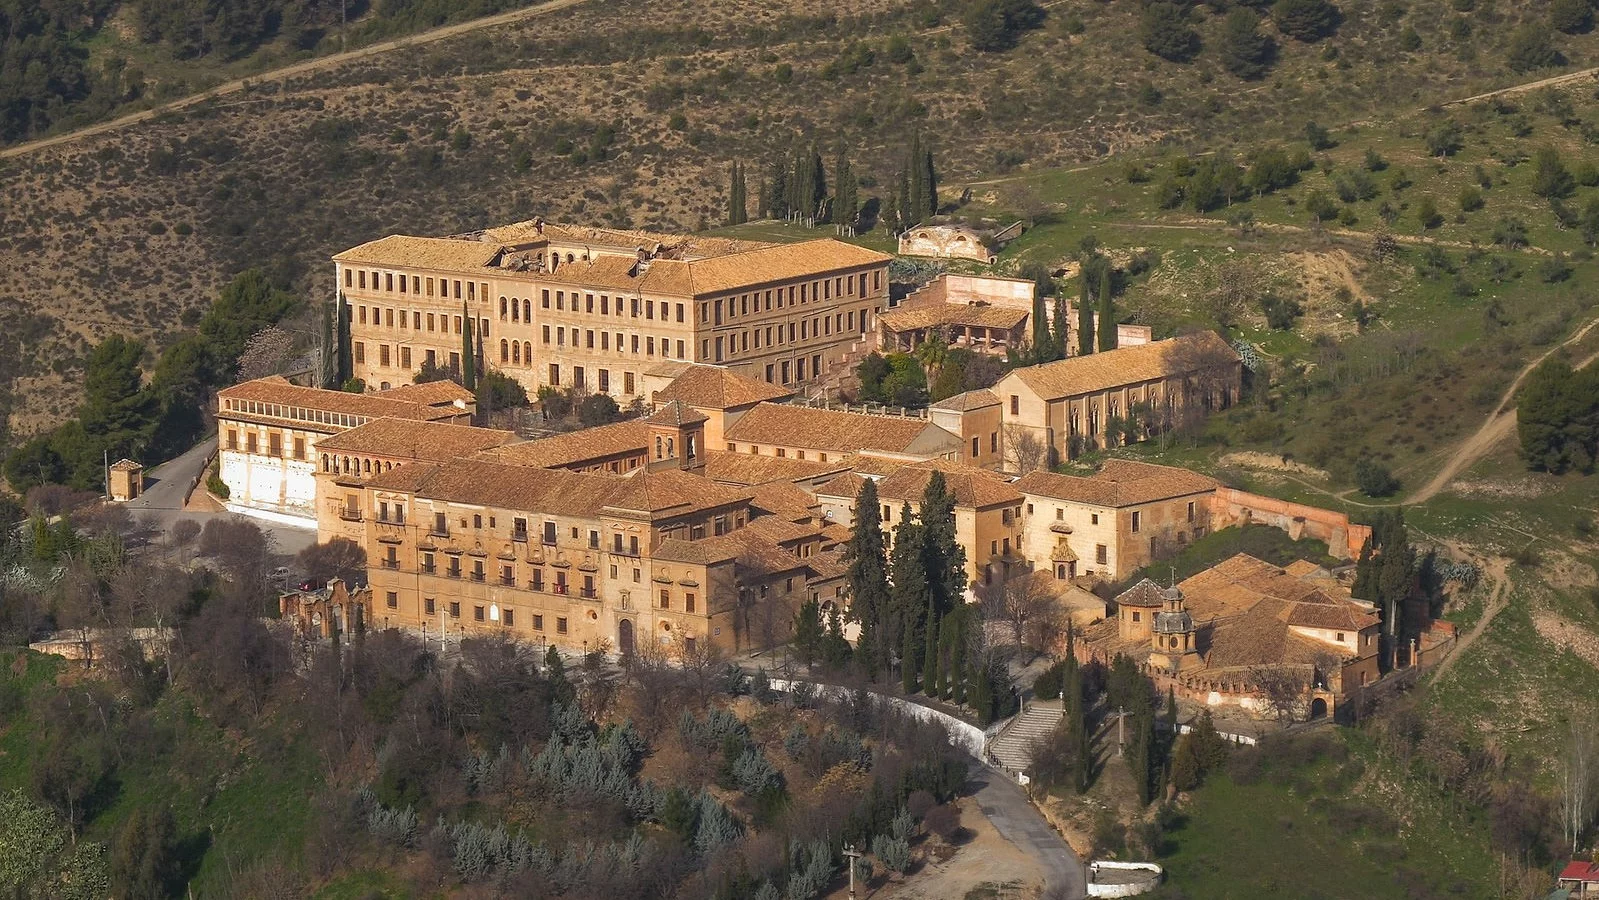 The Sacromonte Abbey